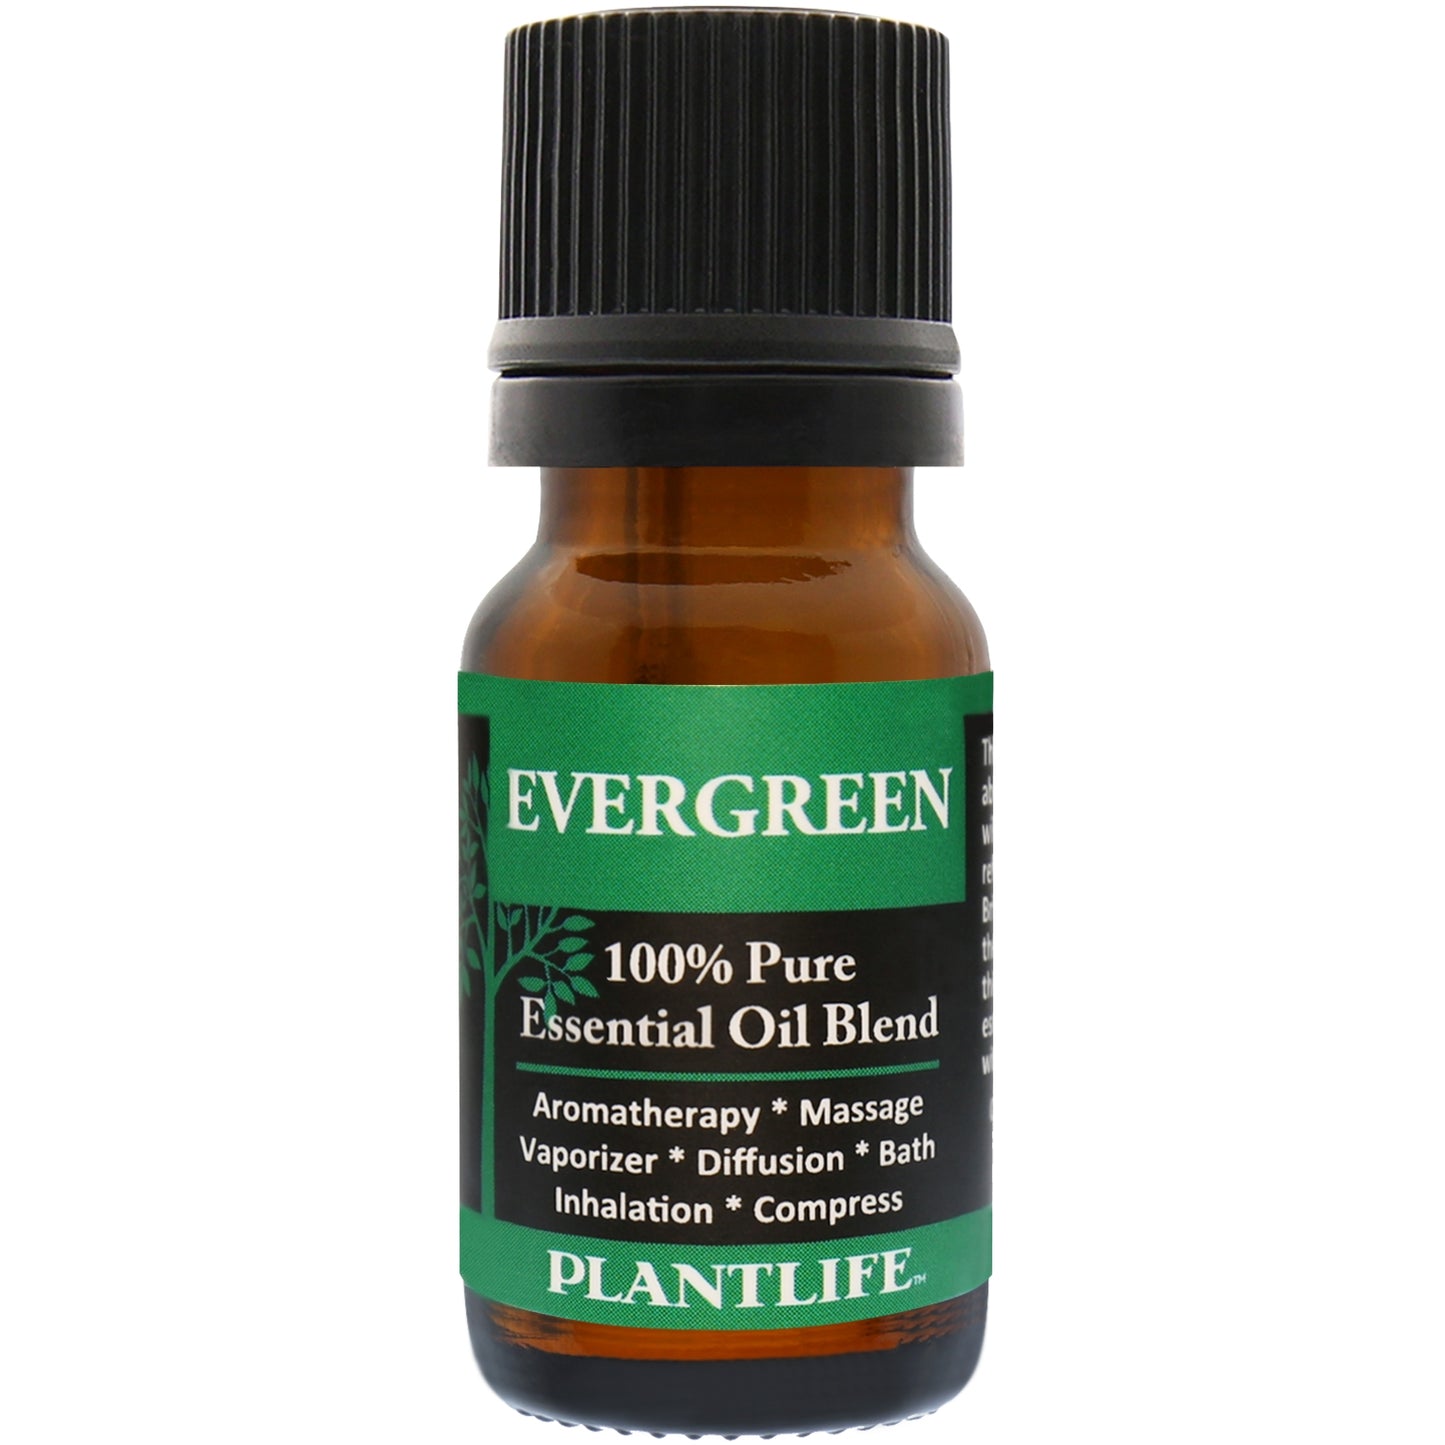 Evergreen Essential Oil